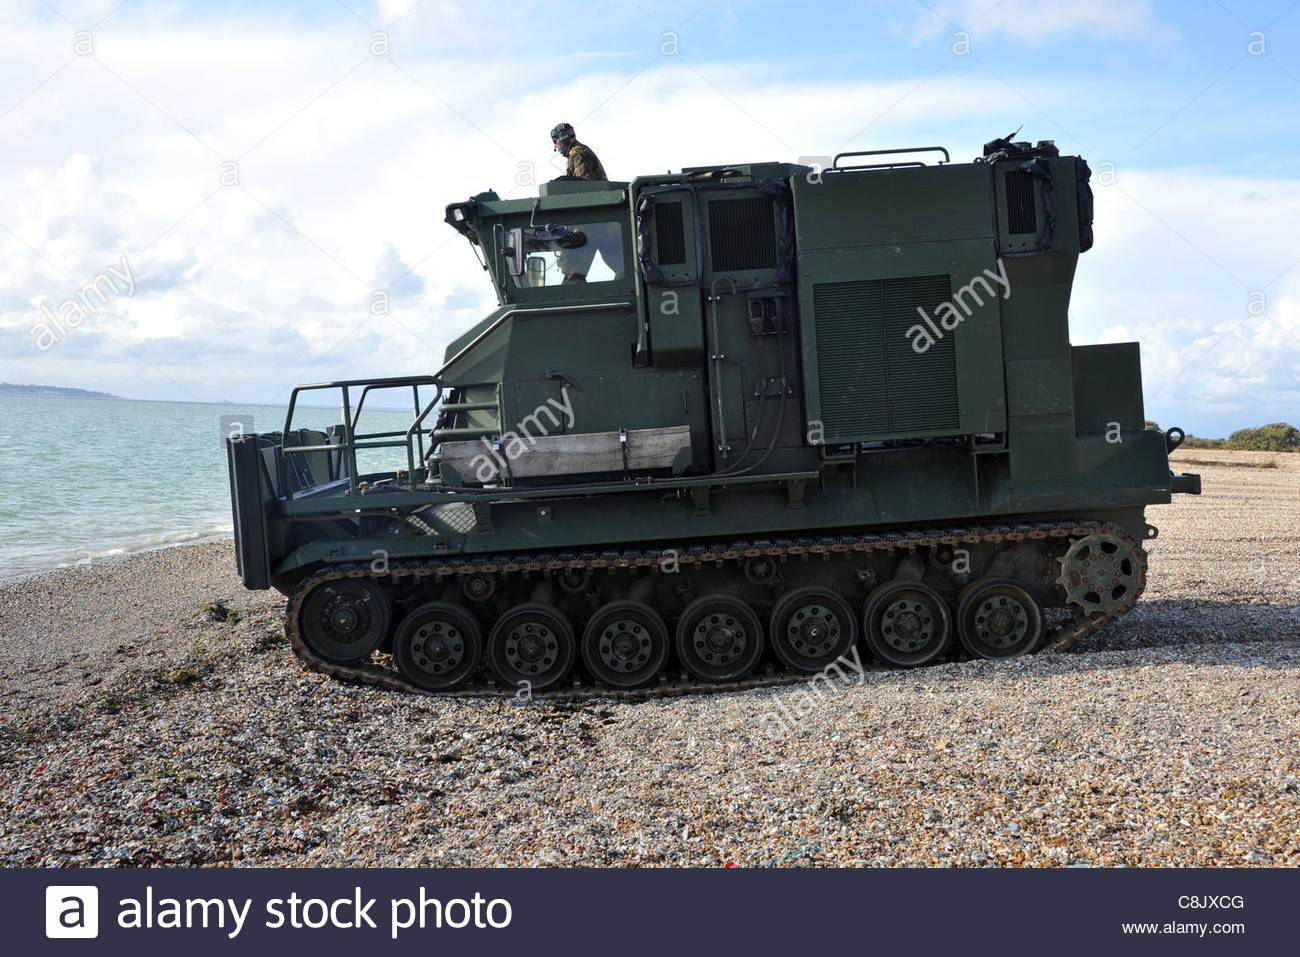 British Army Armoured Recovery Vehicle Stock Photos & British Army.